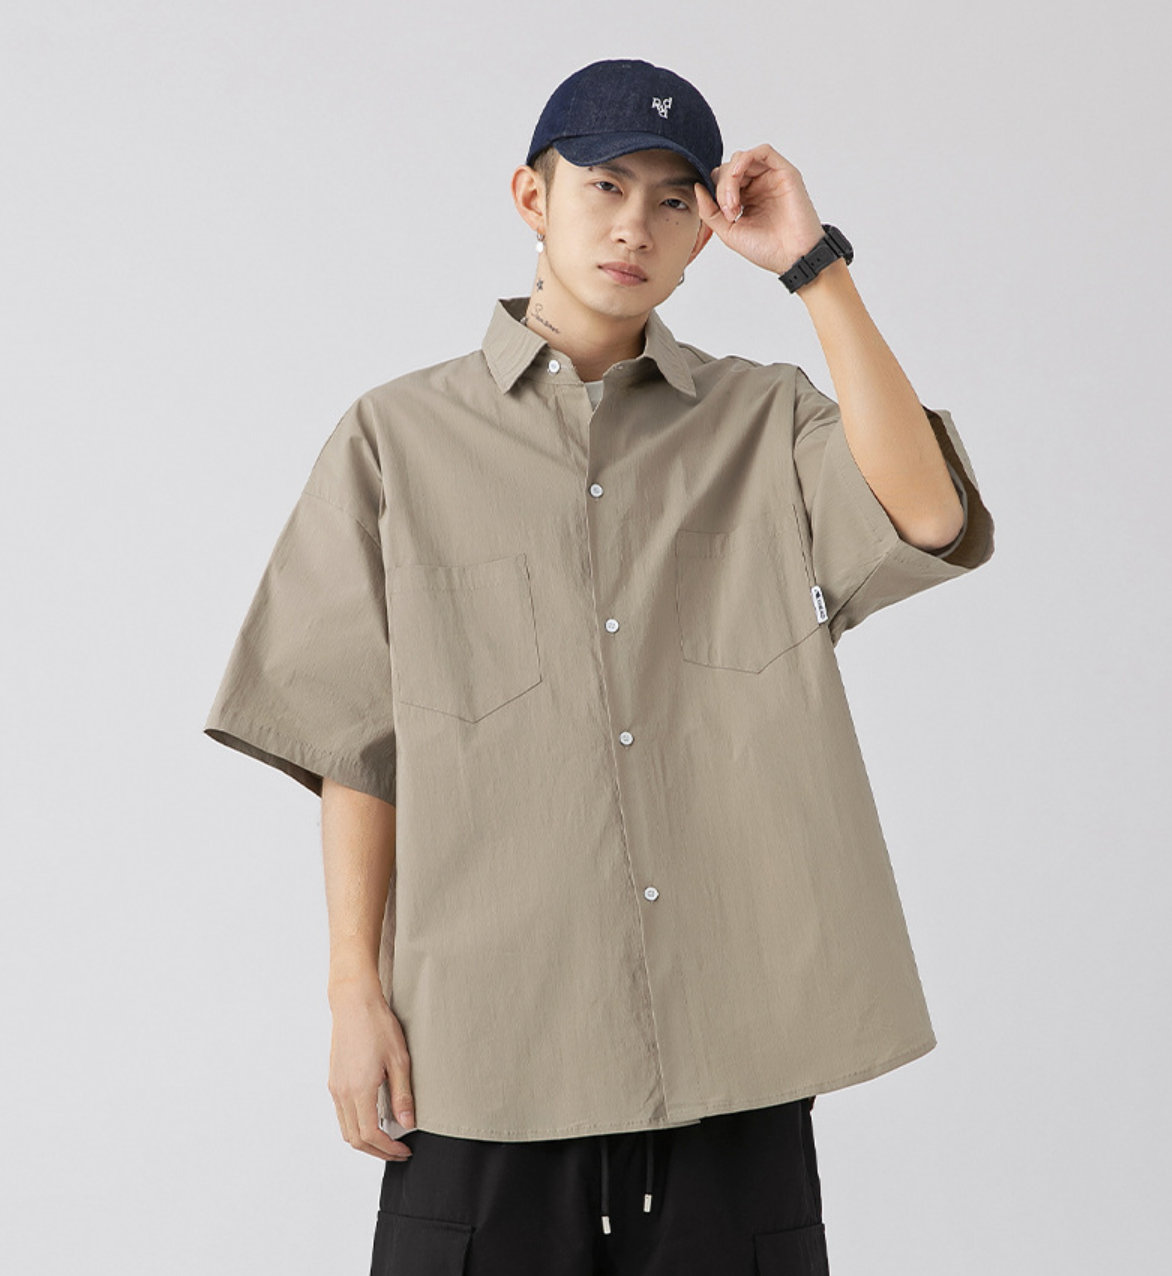 Urban Nylon Buttoned Shirt in Khaki